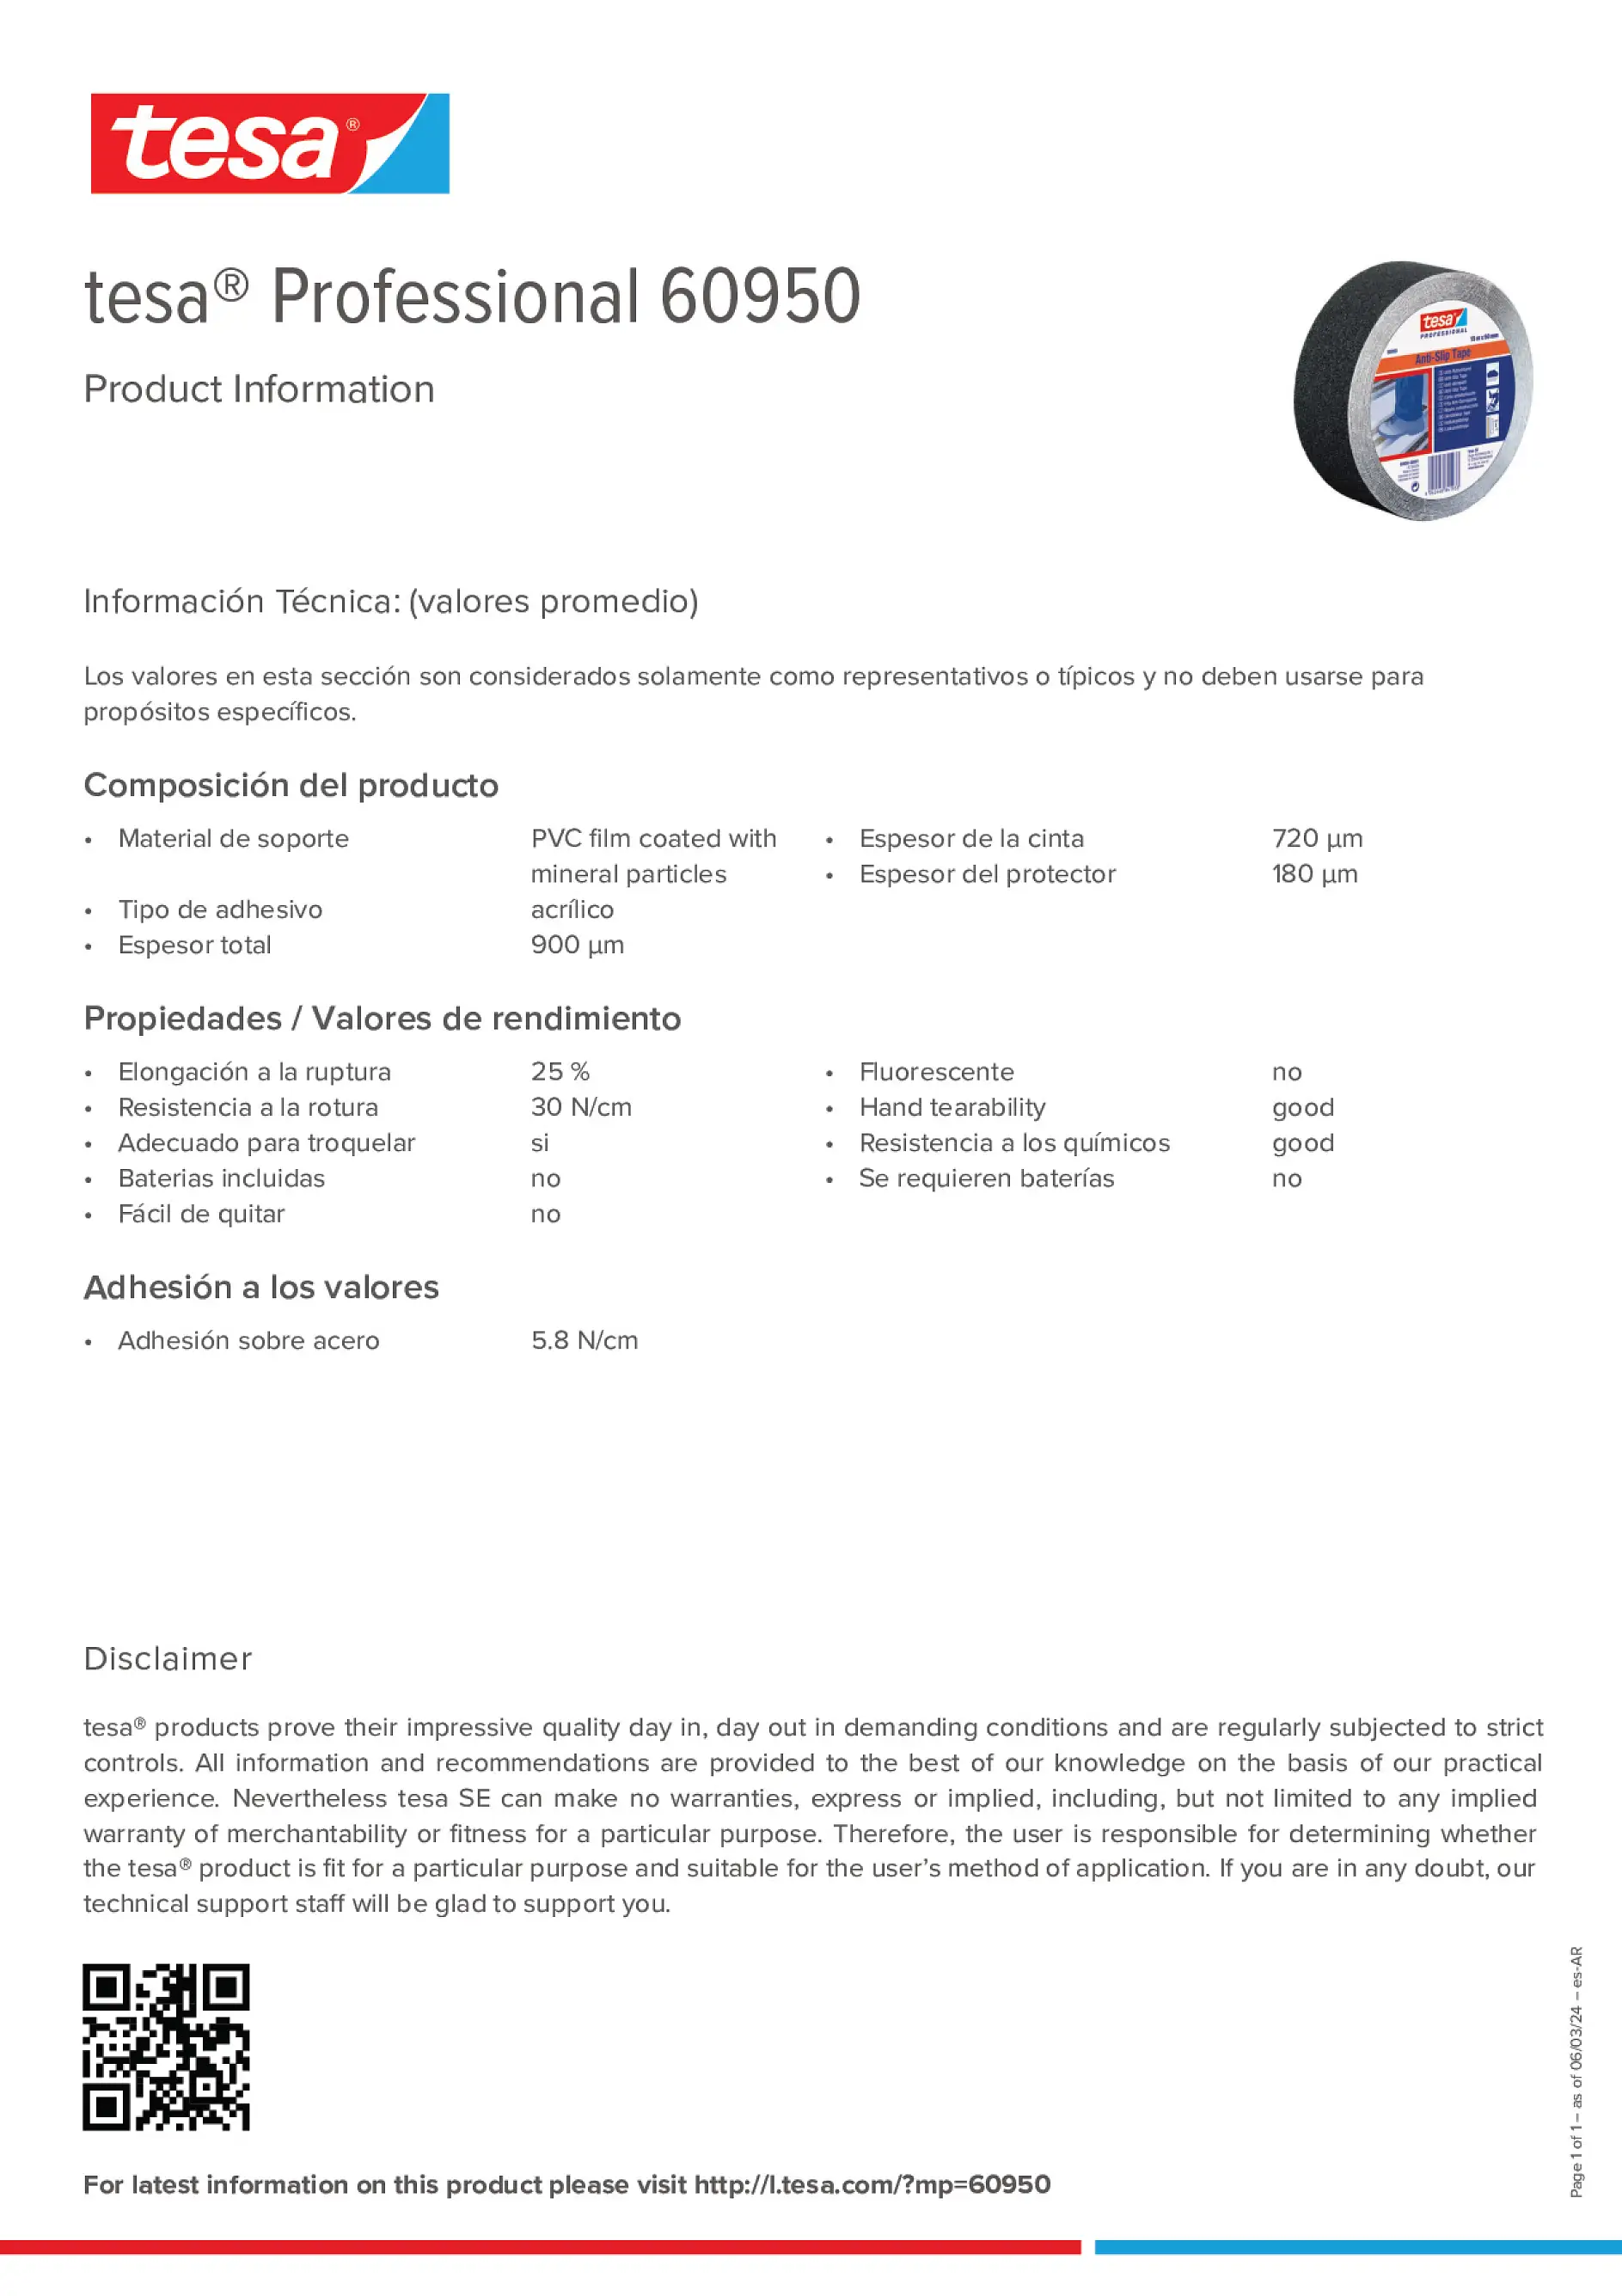 Product information_tesa® Professional 60950_es-AR